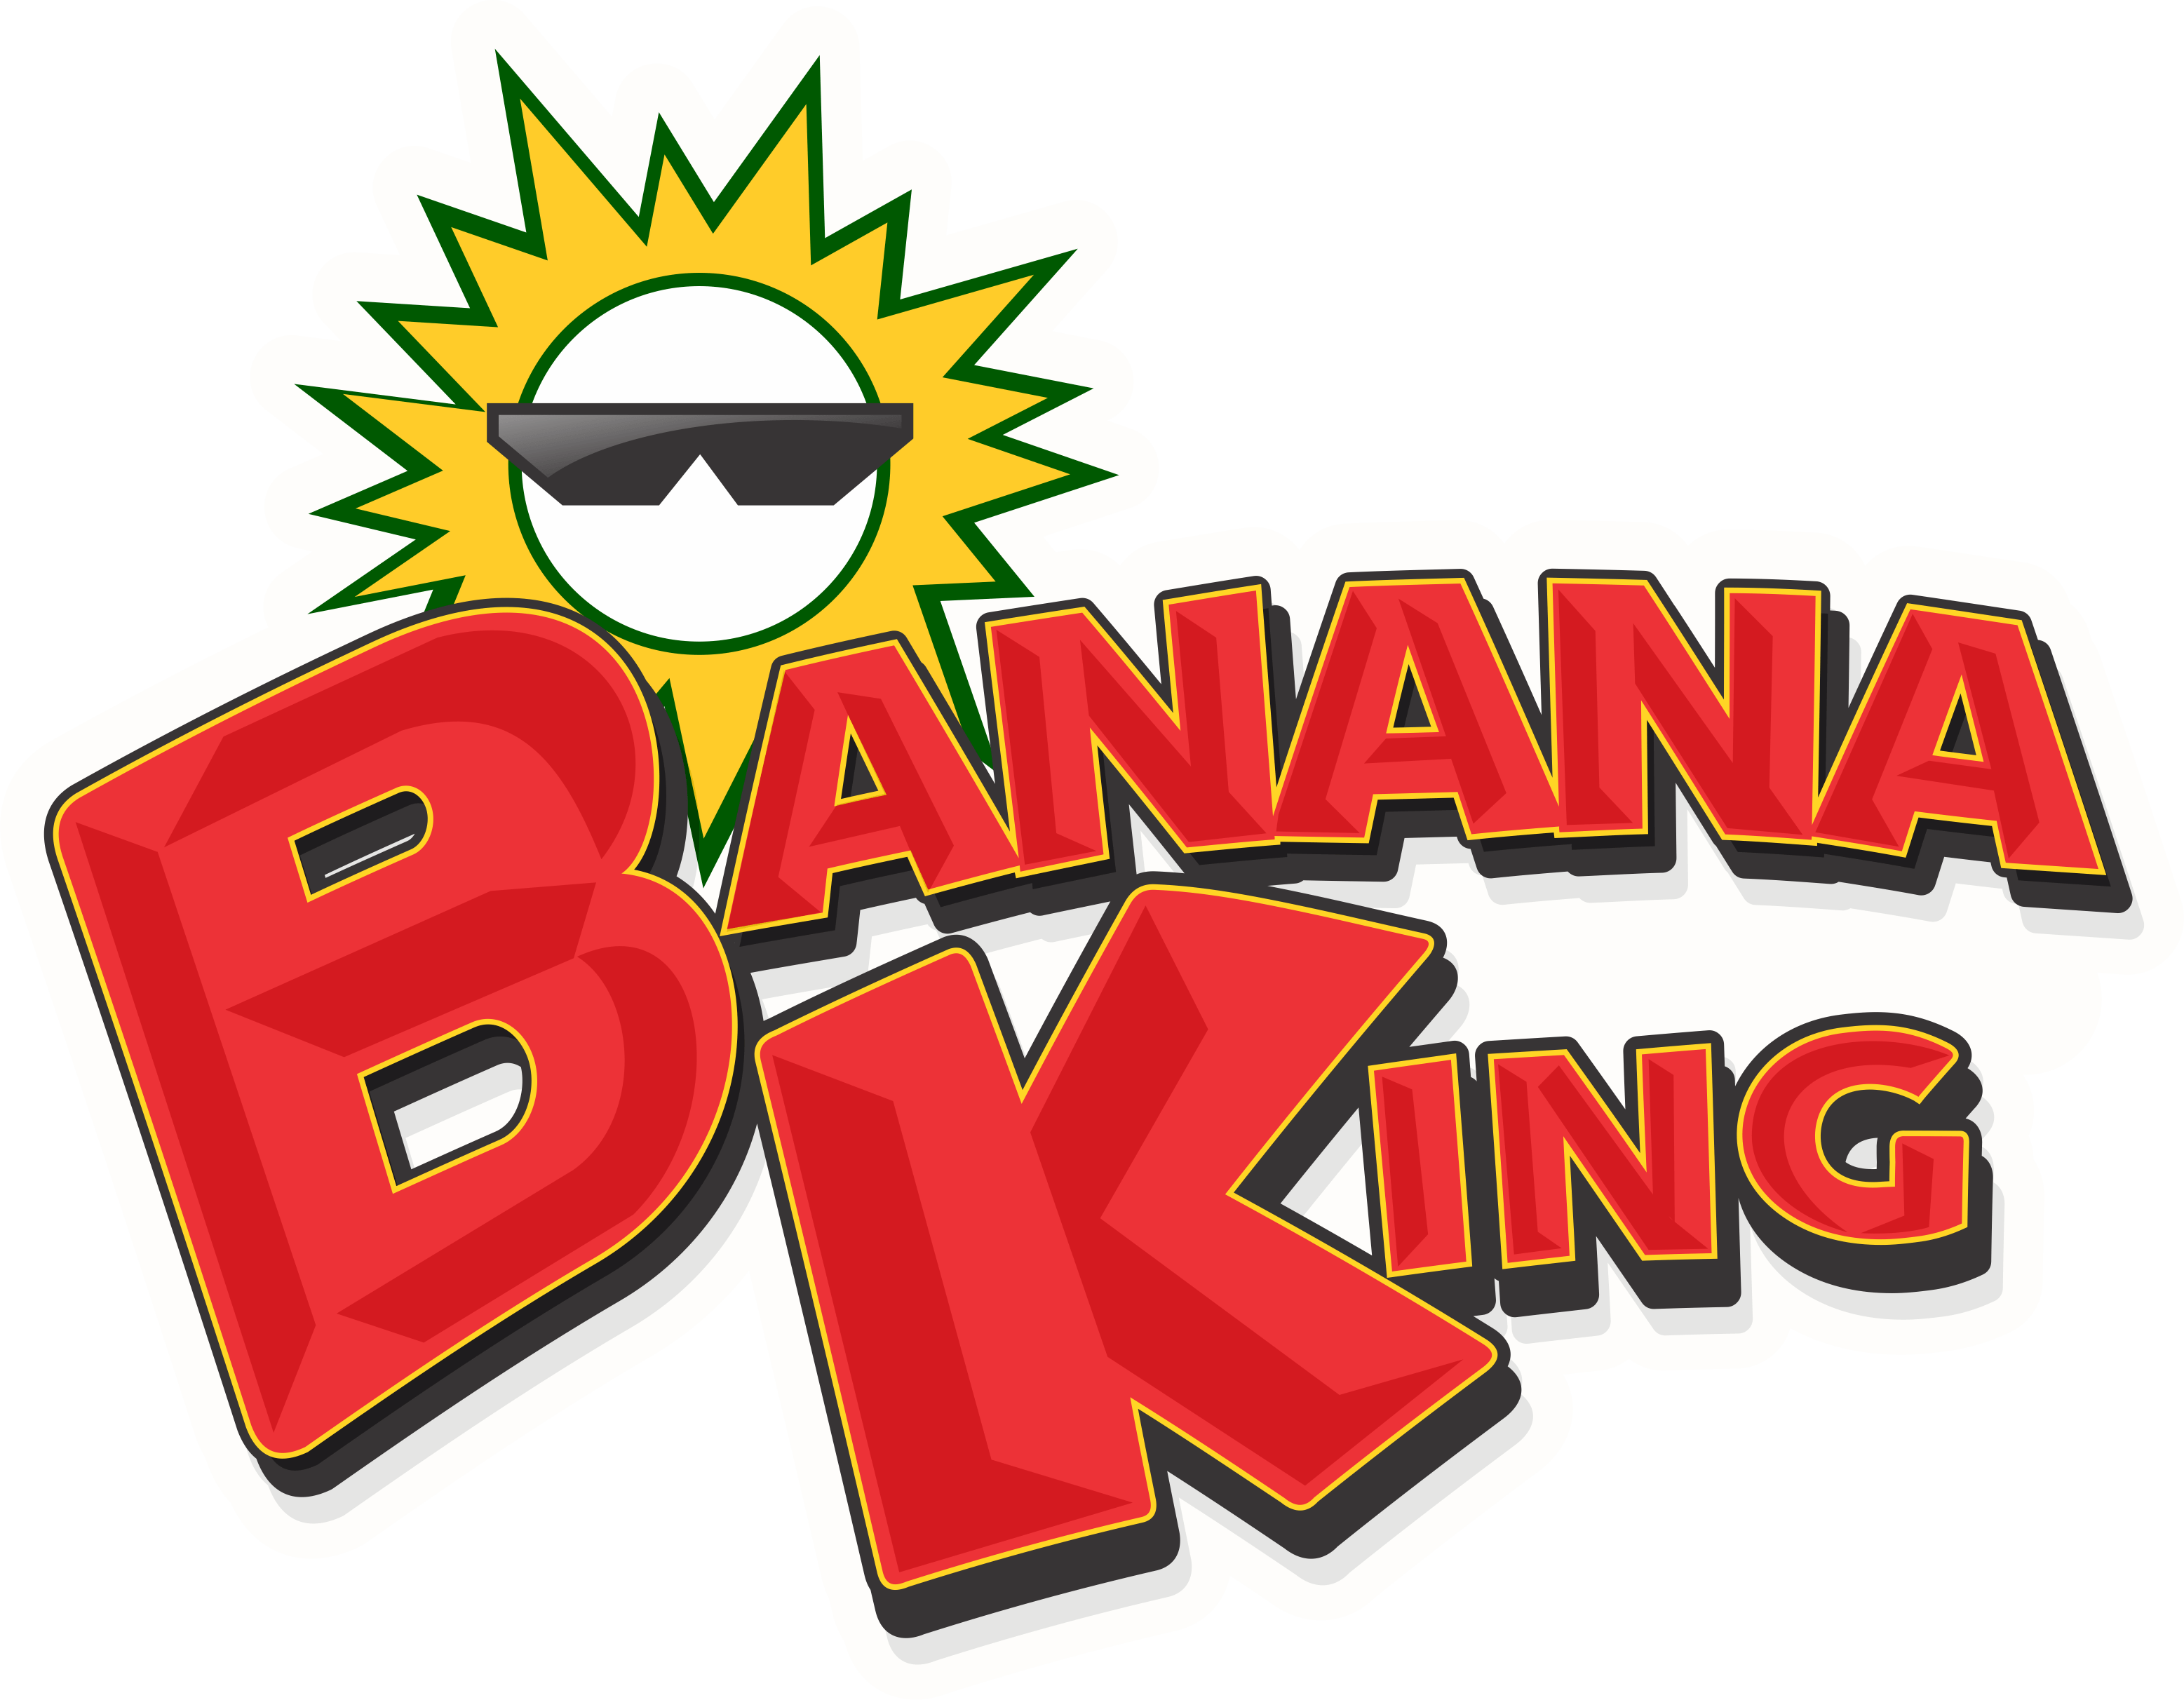 Barnana Logo - Banana King Corp